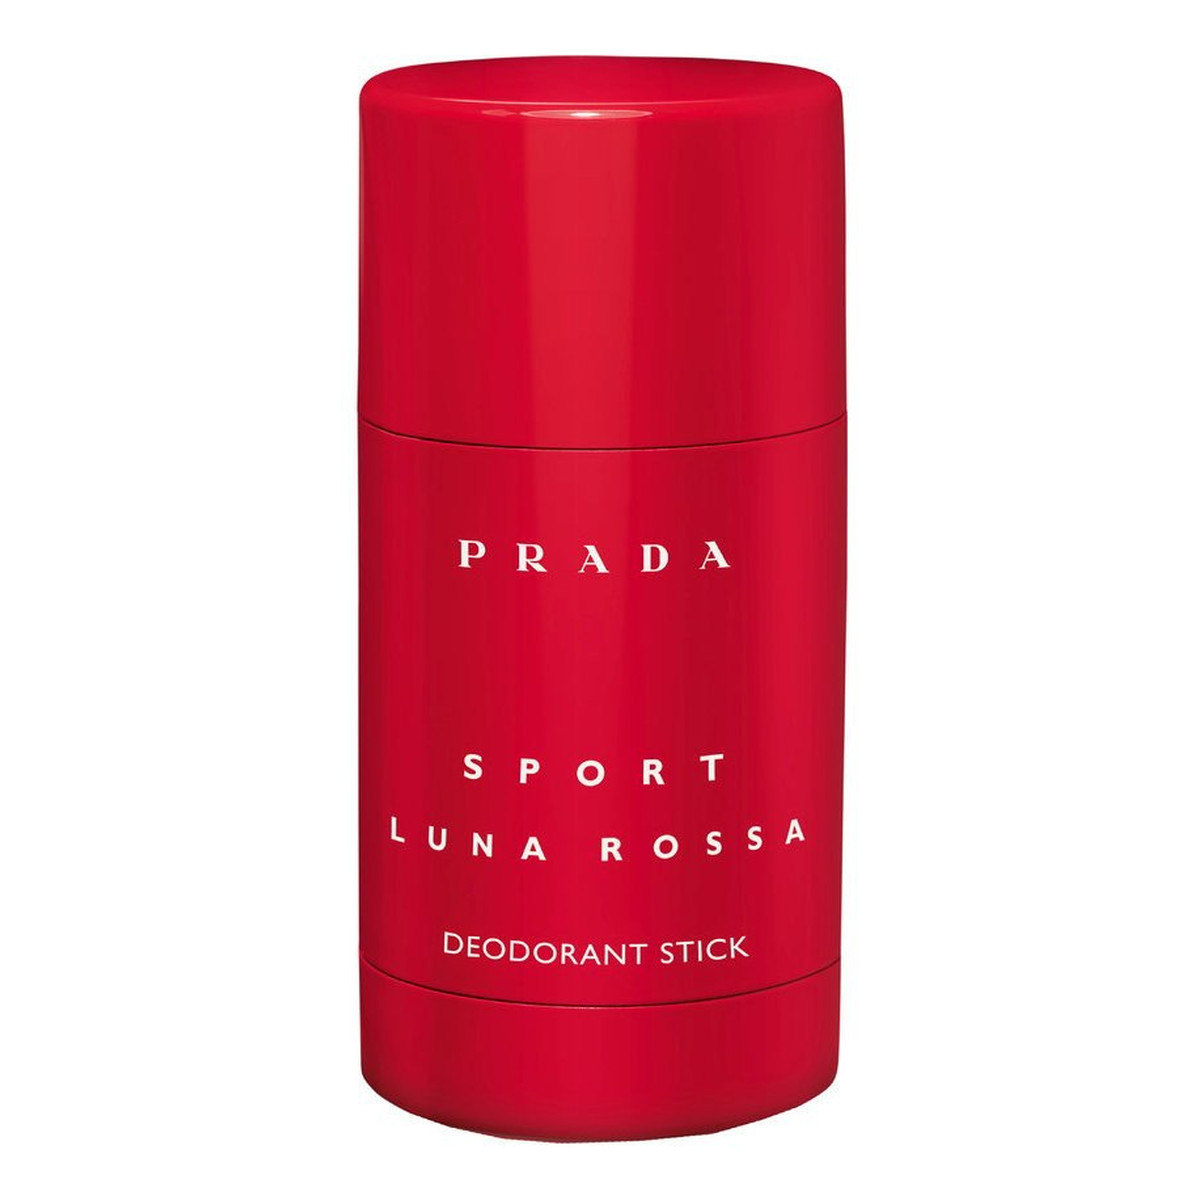 Prada Luna Rossa Sport dezodorant sztyft 75ml